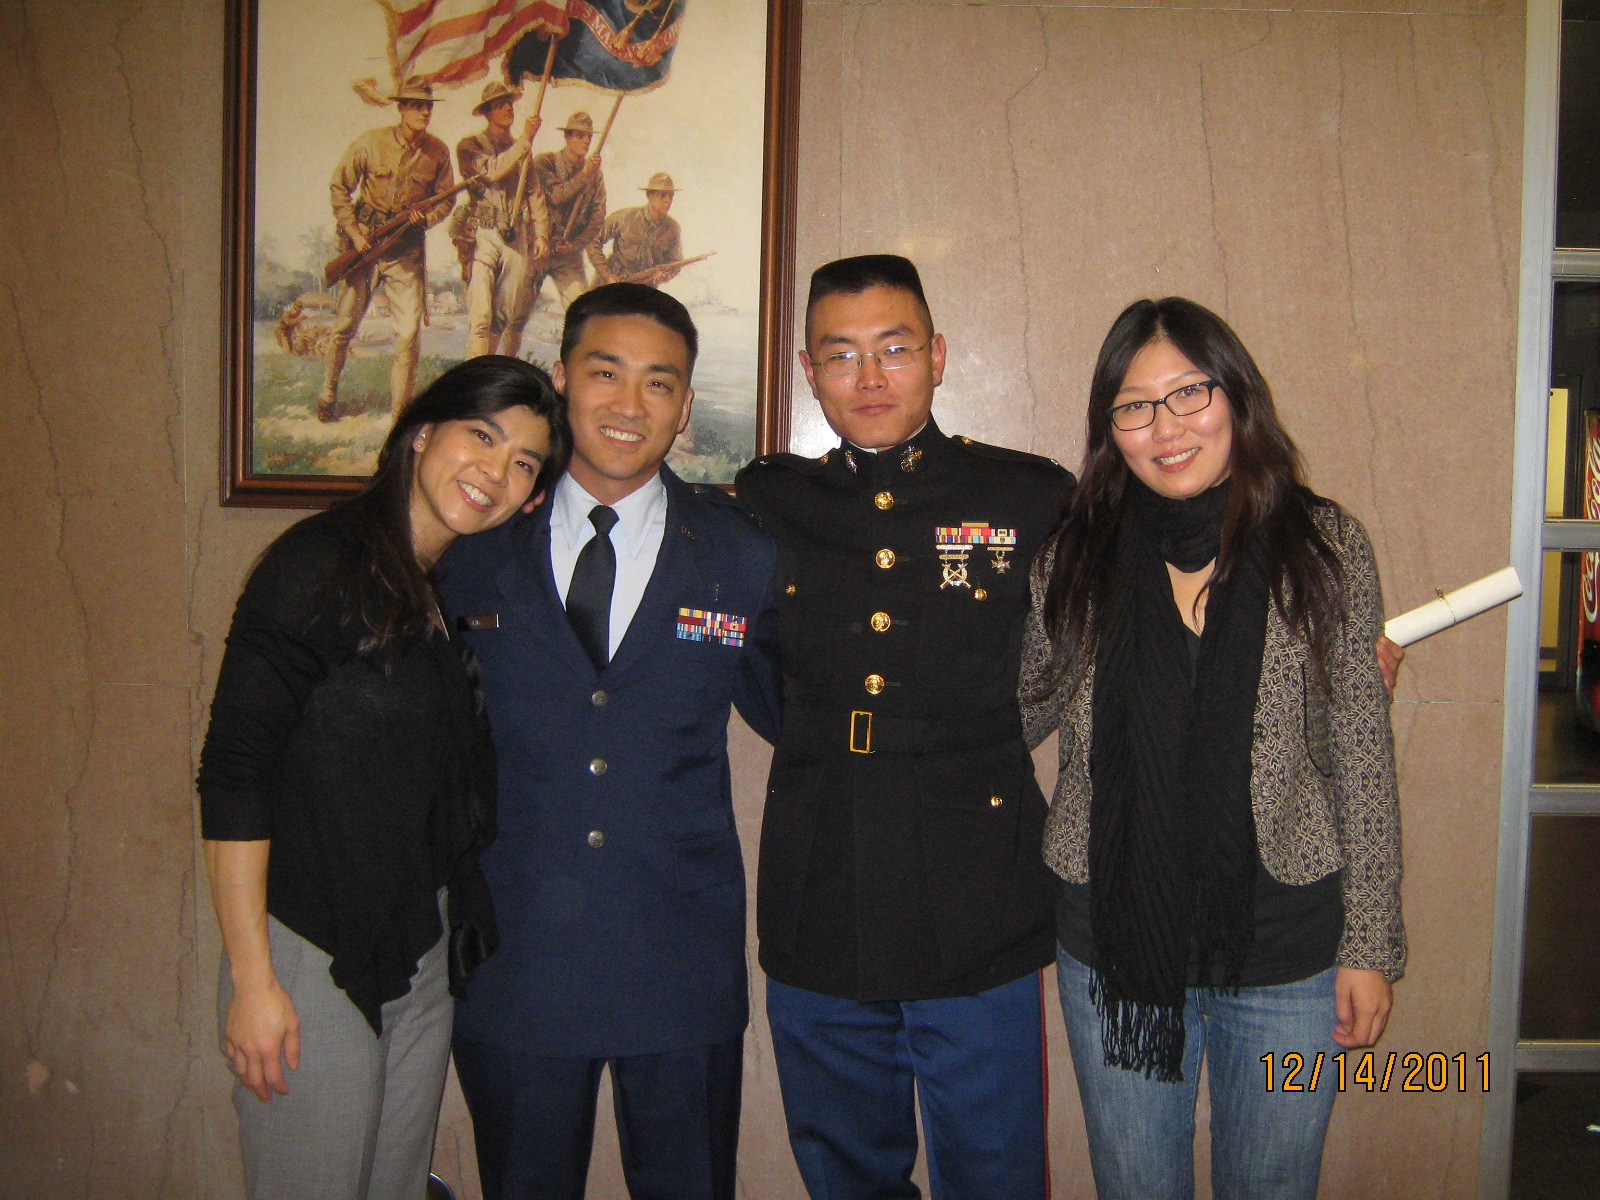 IMG_1805.JPG : Dec 14, 2011 Jason's Graduation at Quantico Marine Base